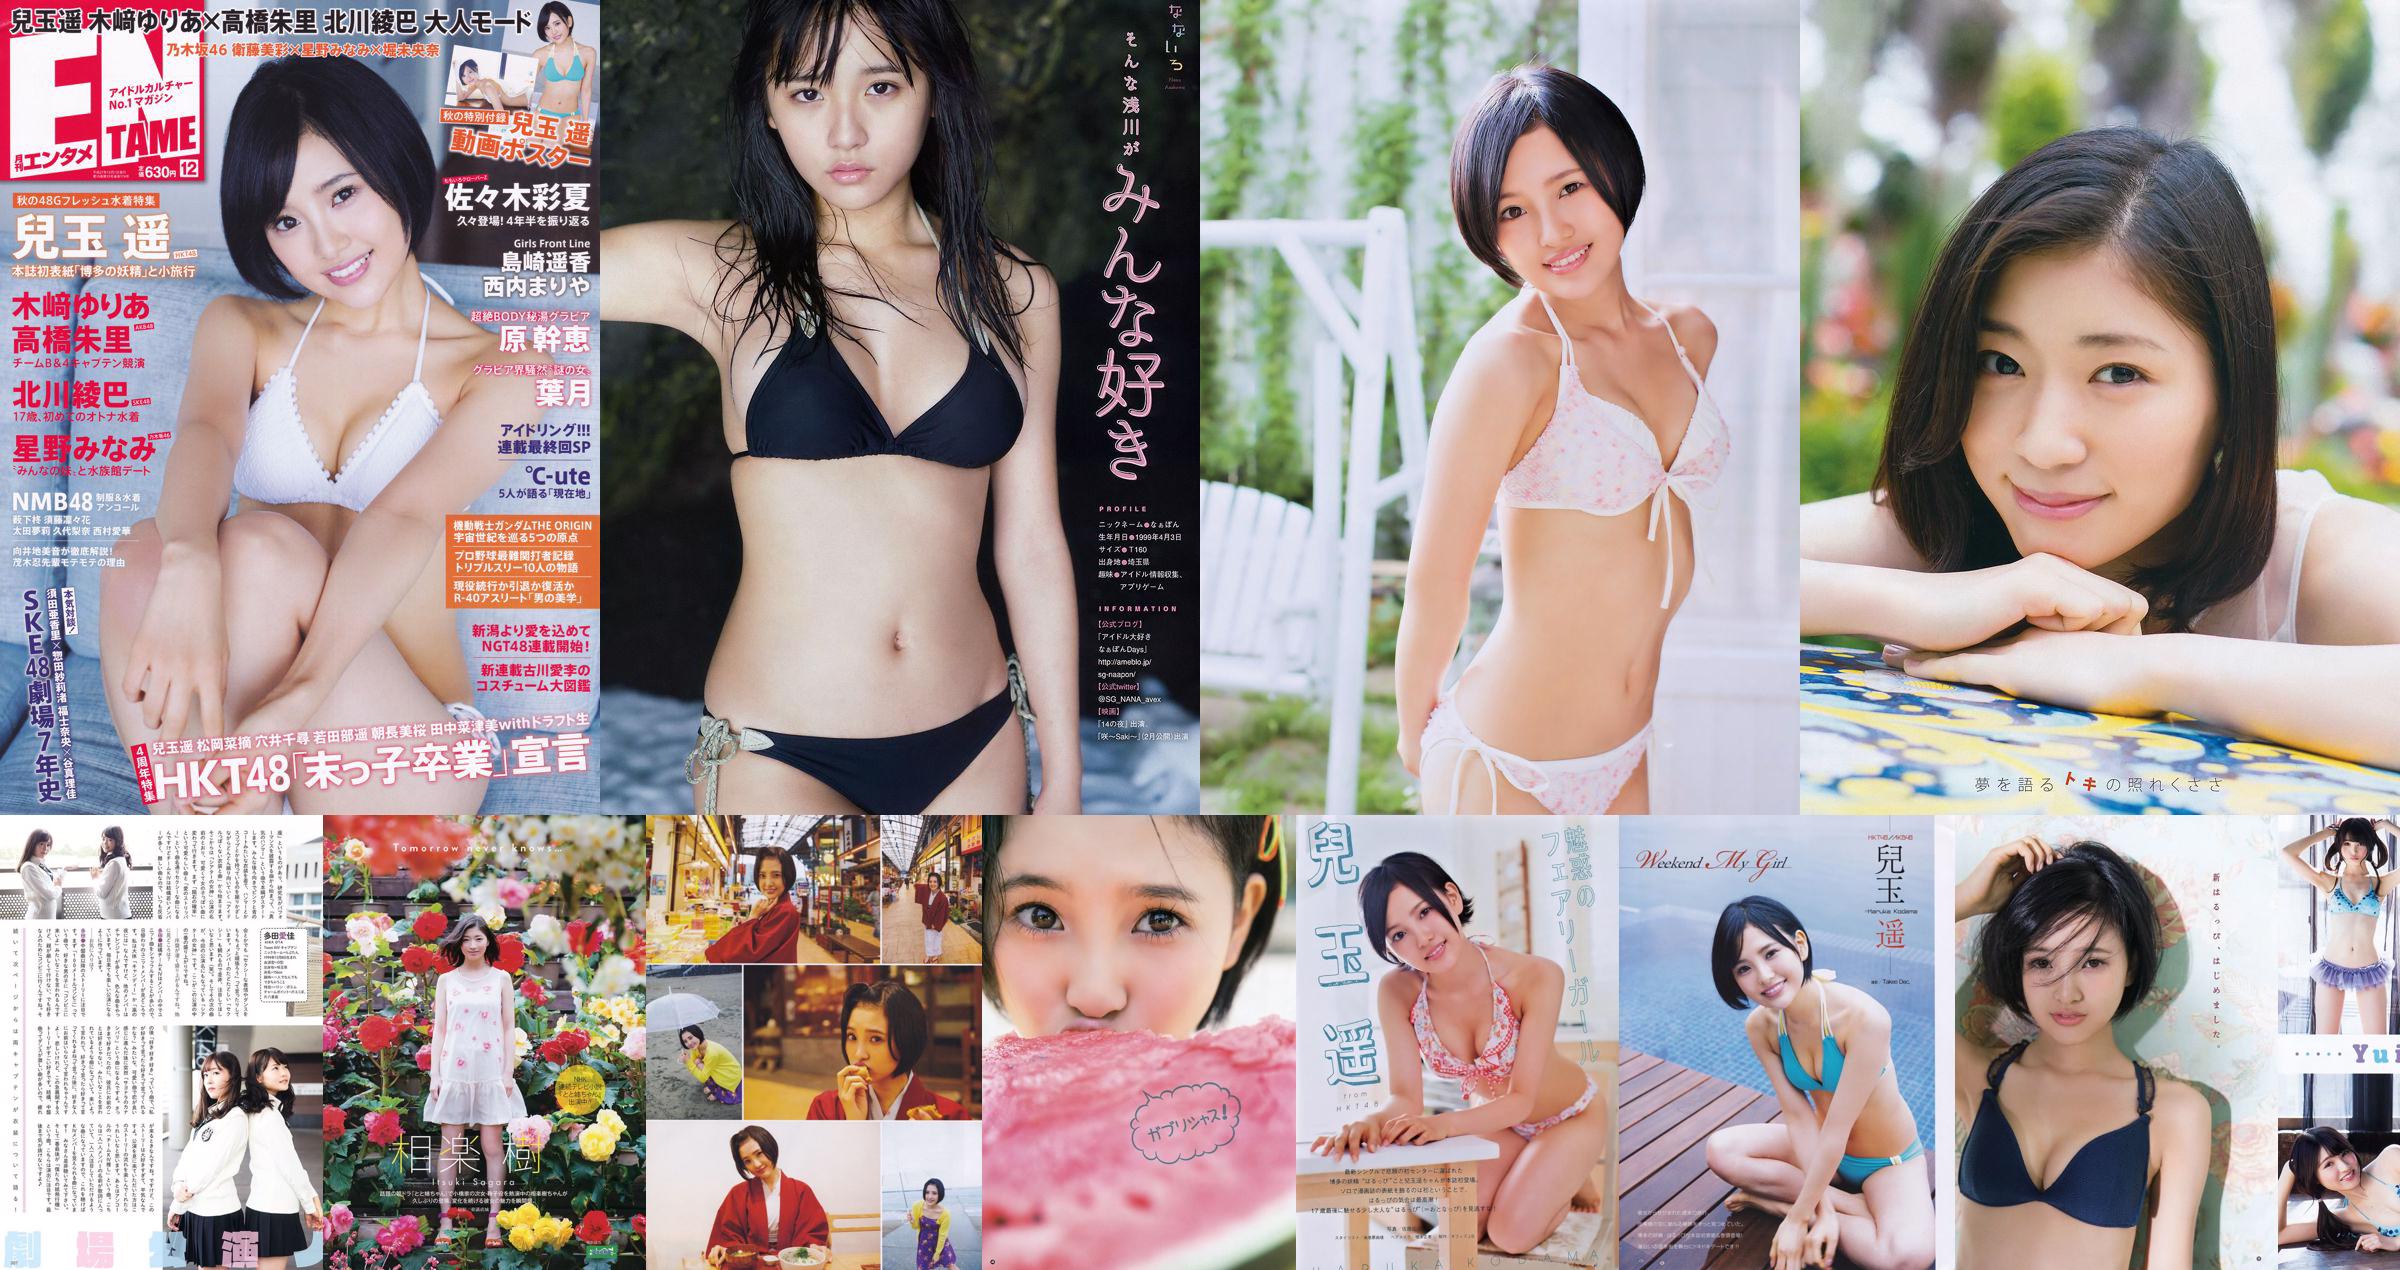 [Young Gangan] Haruka Kodama Saki Takeda 2015 Palet de photos n ° 12 No.36164a Page 3